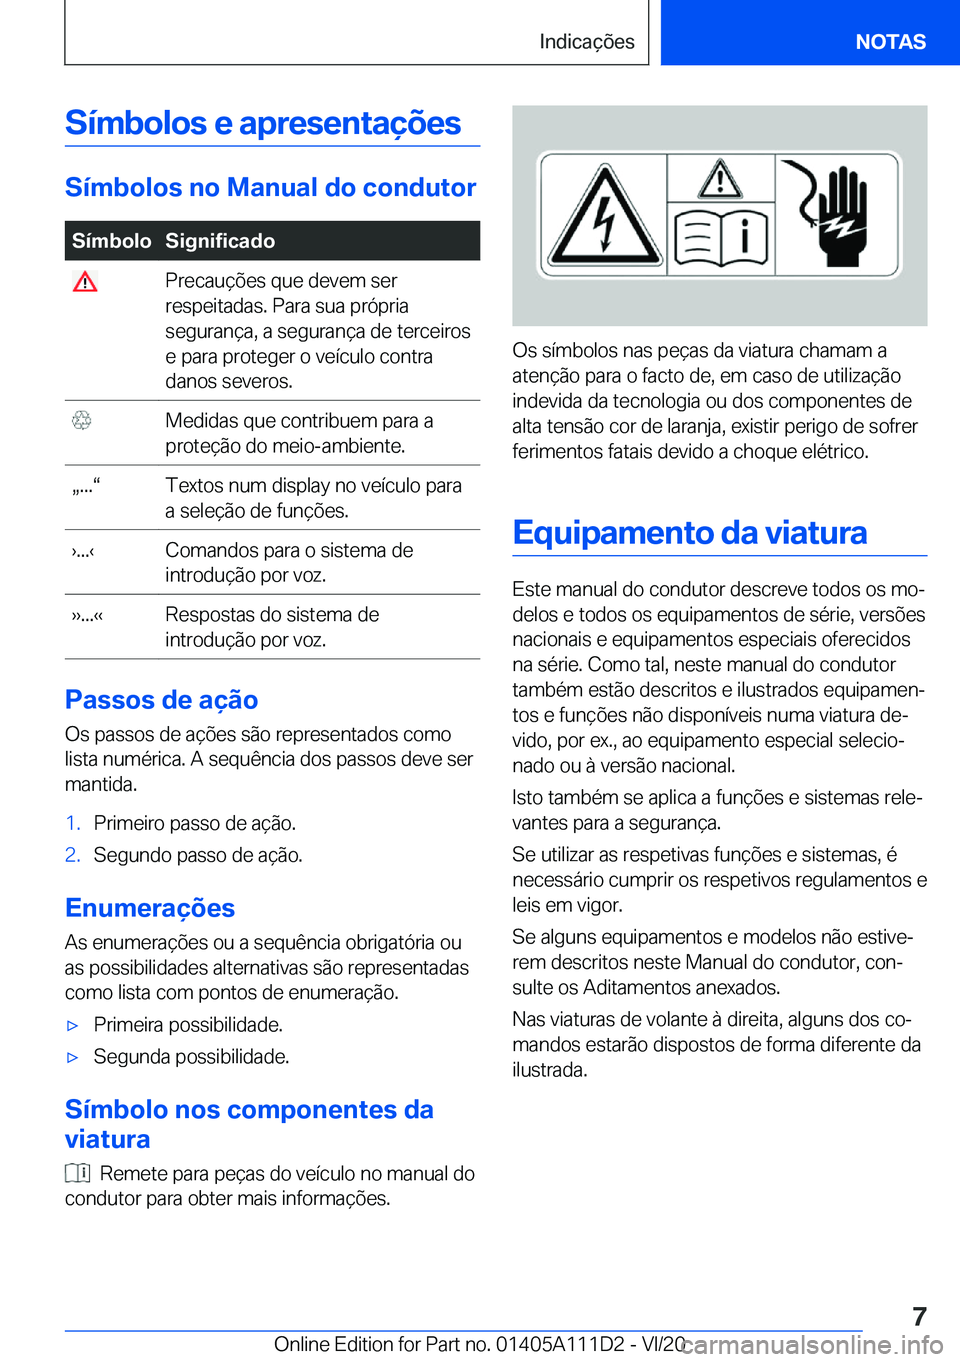 BMW 3 SERIES SEDAN PLUG-IN HYBRID 2021  Manual do condutor (in Portuguese) �S�